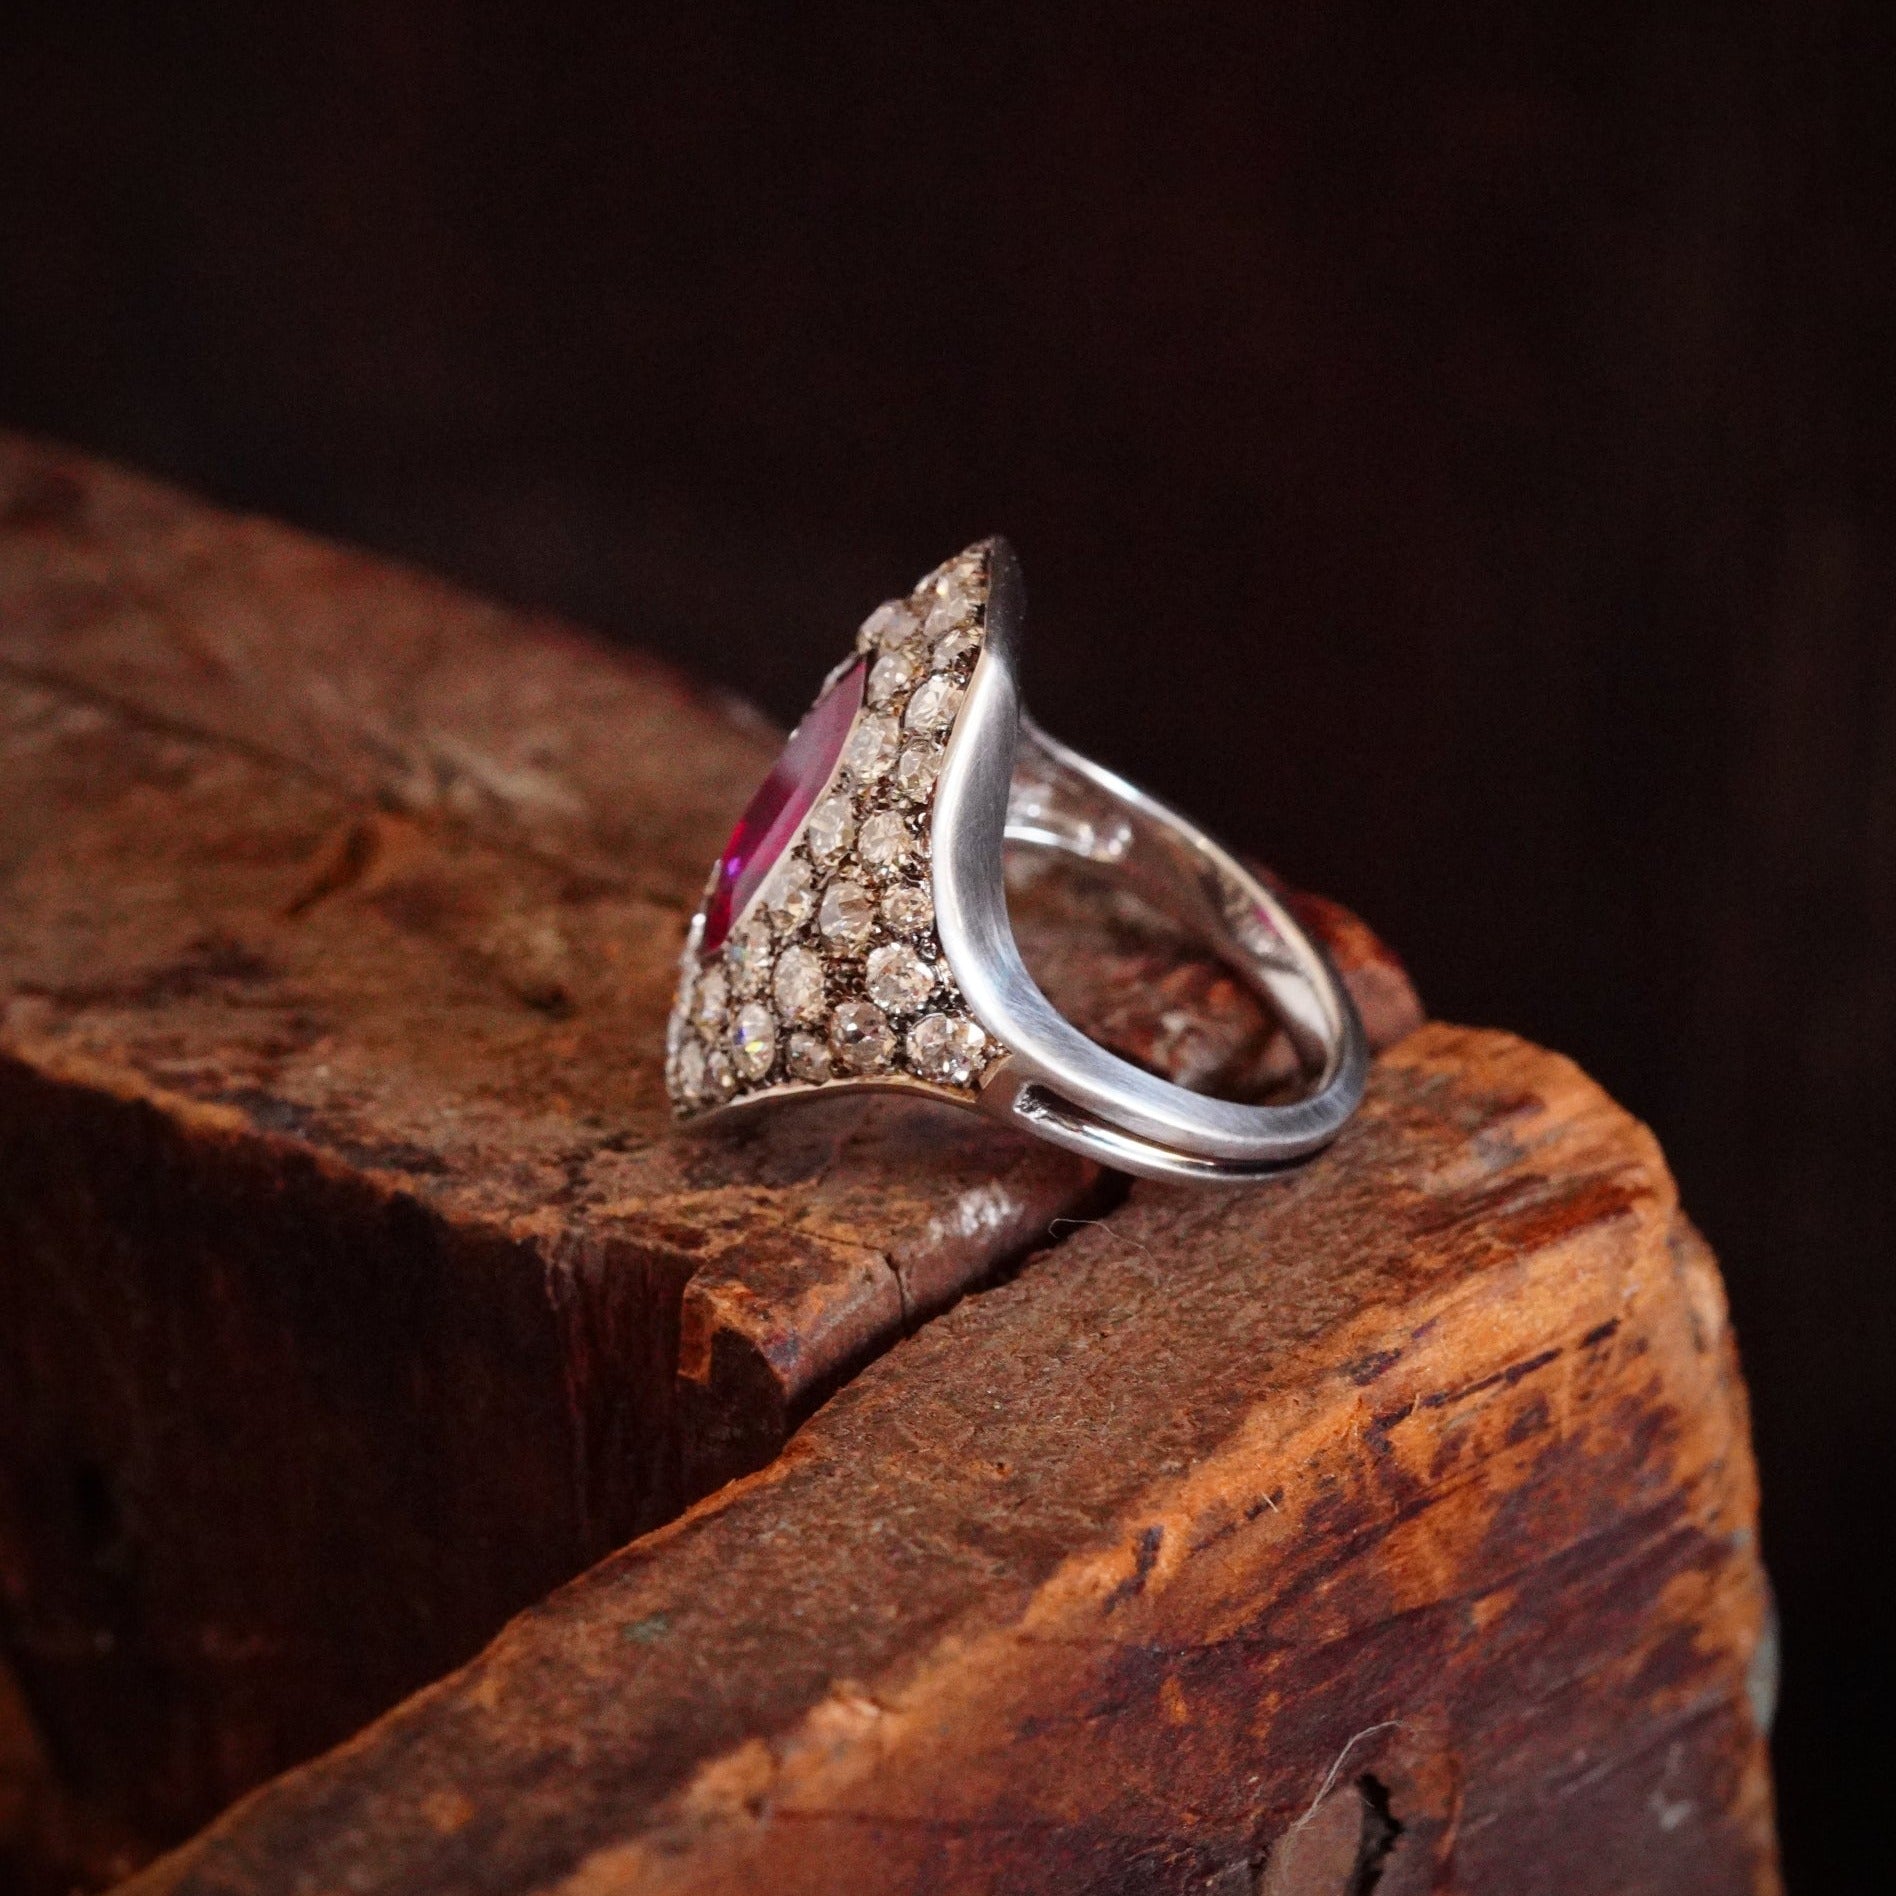 Victorian-Inspired Burma No-Heat Ruby and Diamond Ring